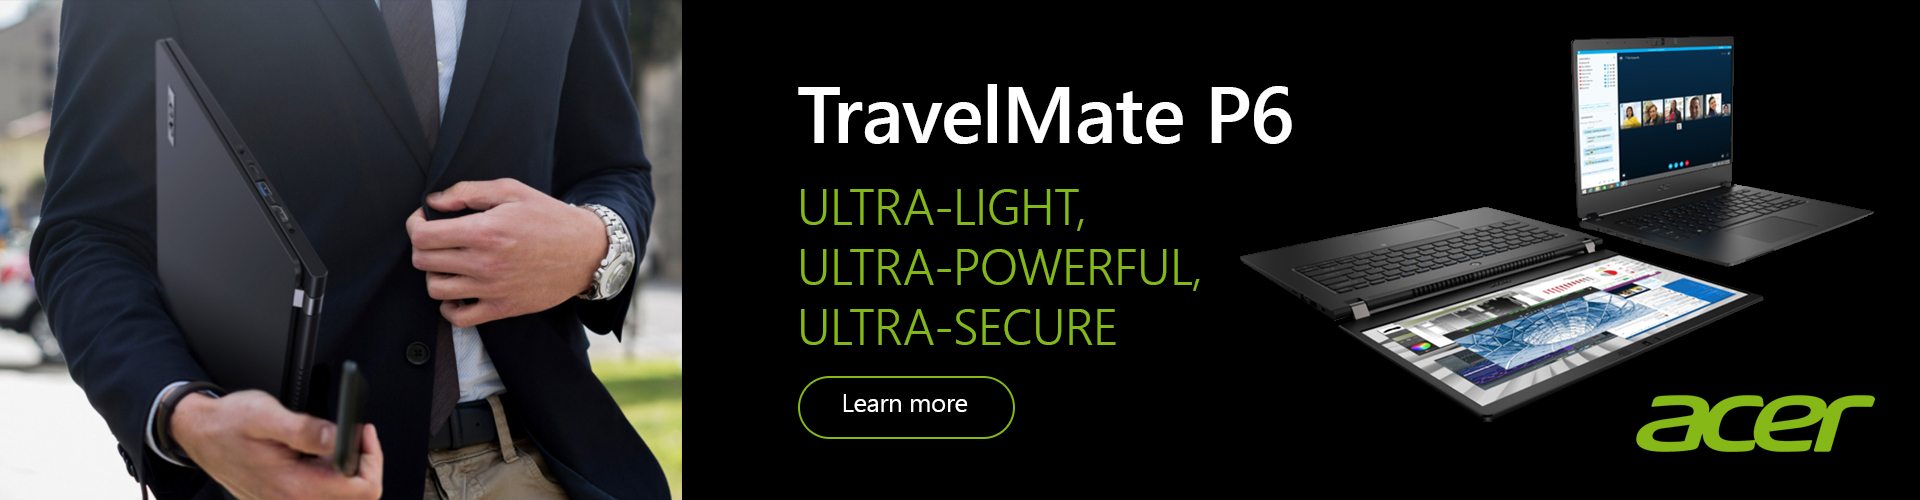 TravelMate P6 - Ultra-light, Ultra-powerful, Ultra-secure